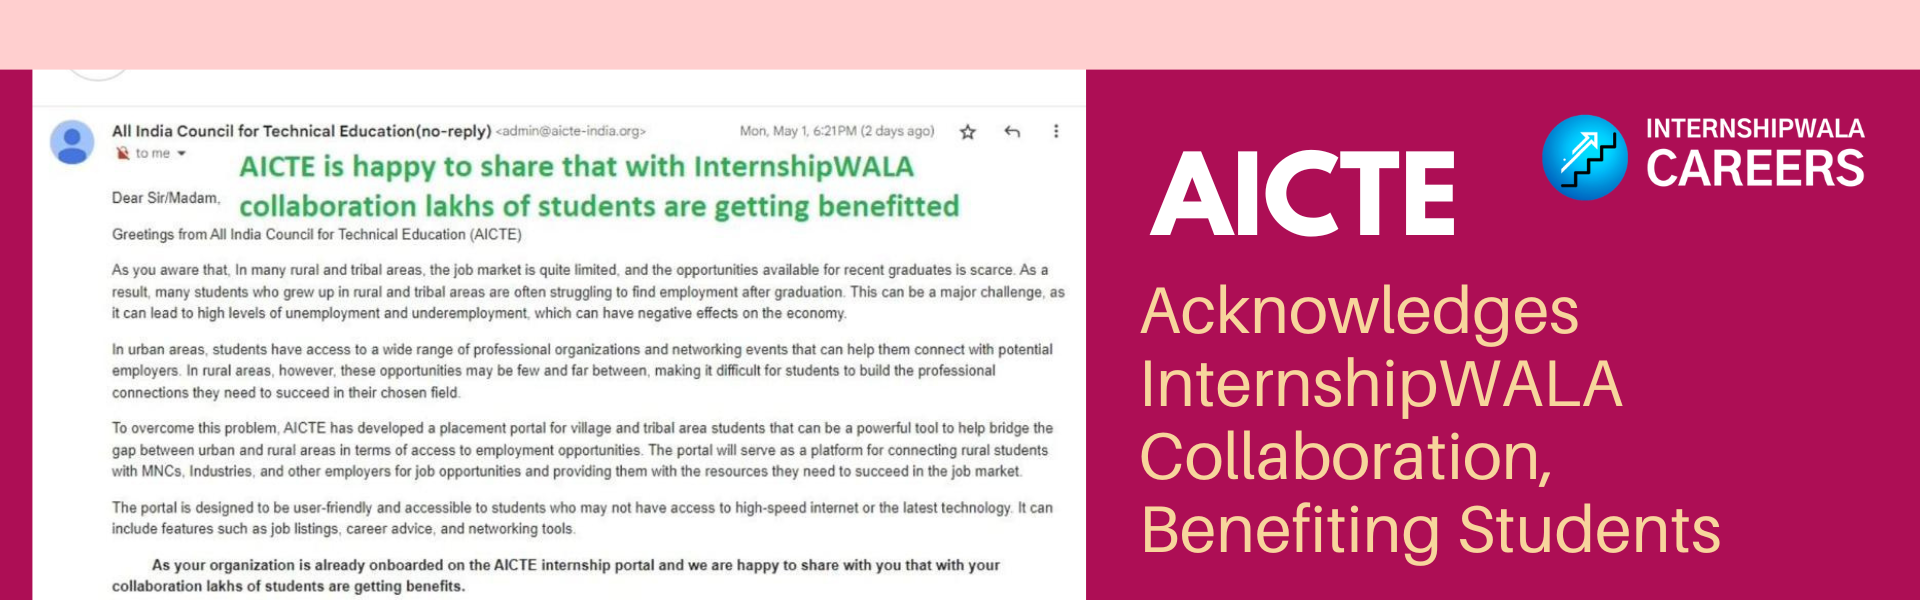 AICTE acknowledges InternshipWALA collaboration, benefiting students